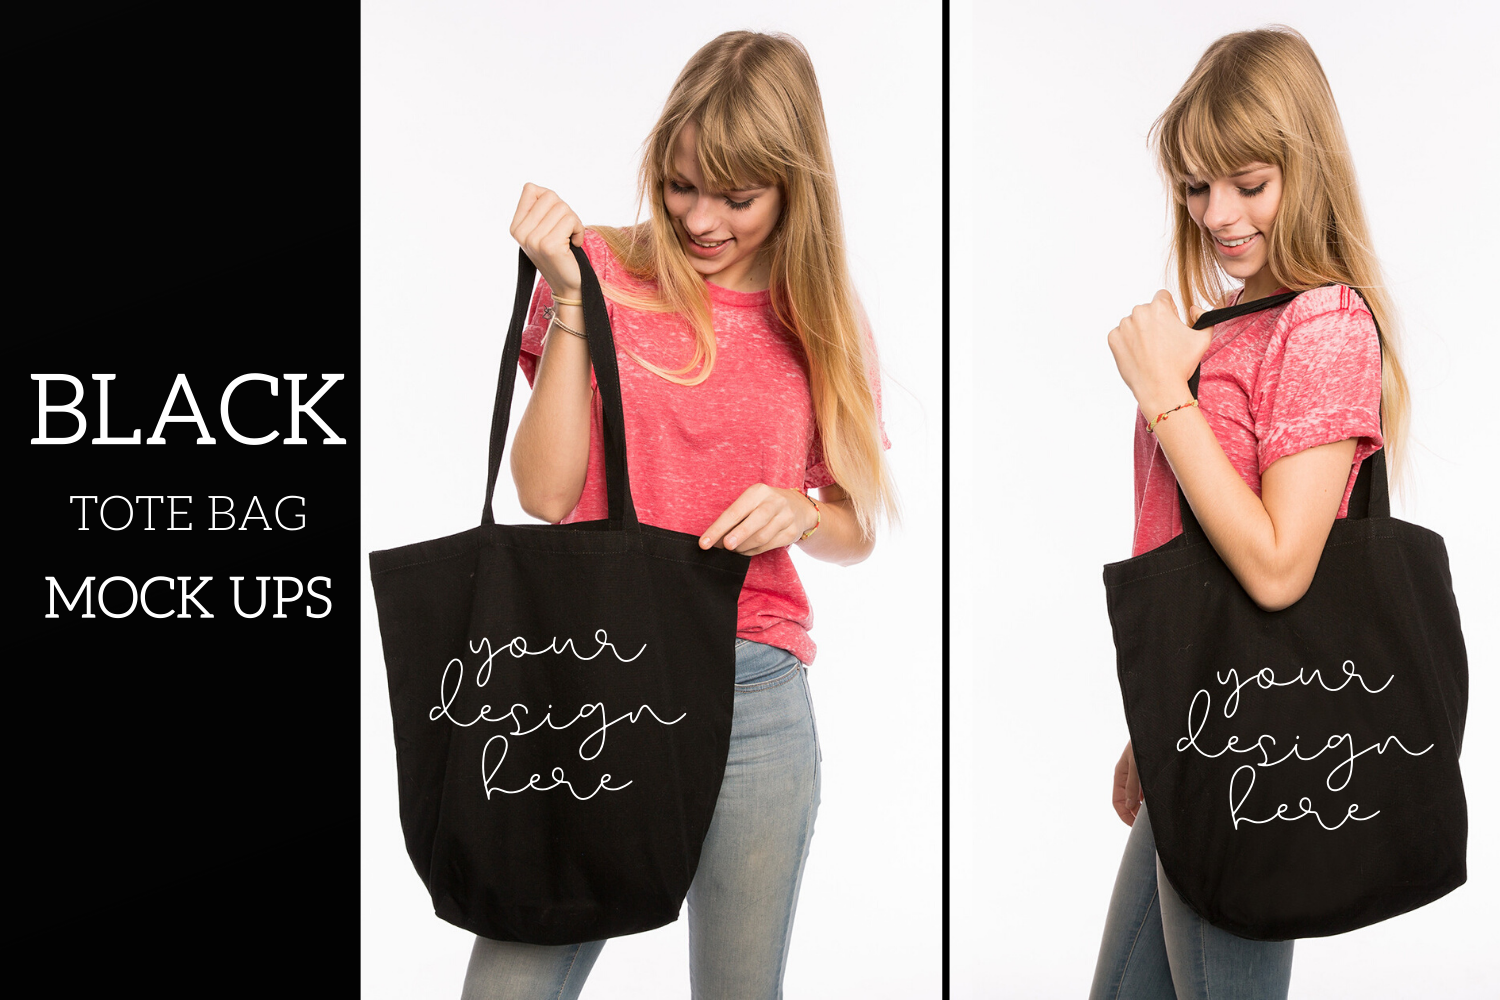 Download Black Tote Bag Mock Ups - 2 - Jpegs/Psds - 1071x1400px